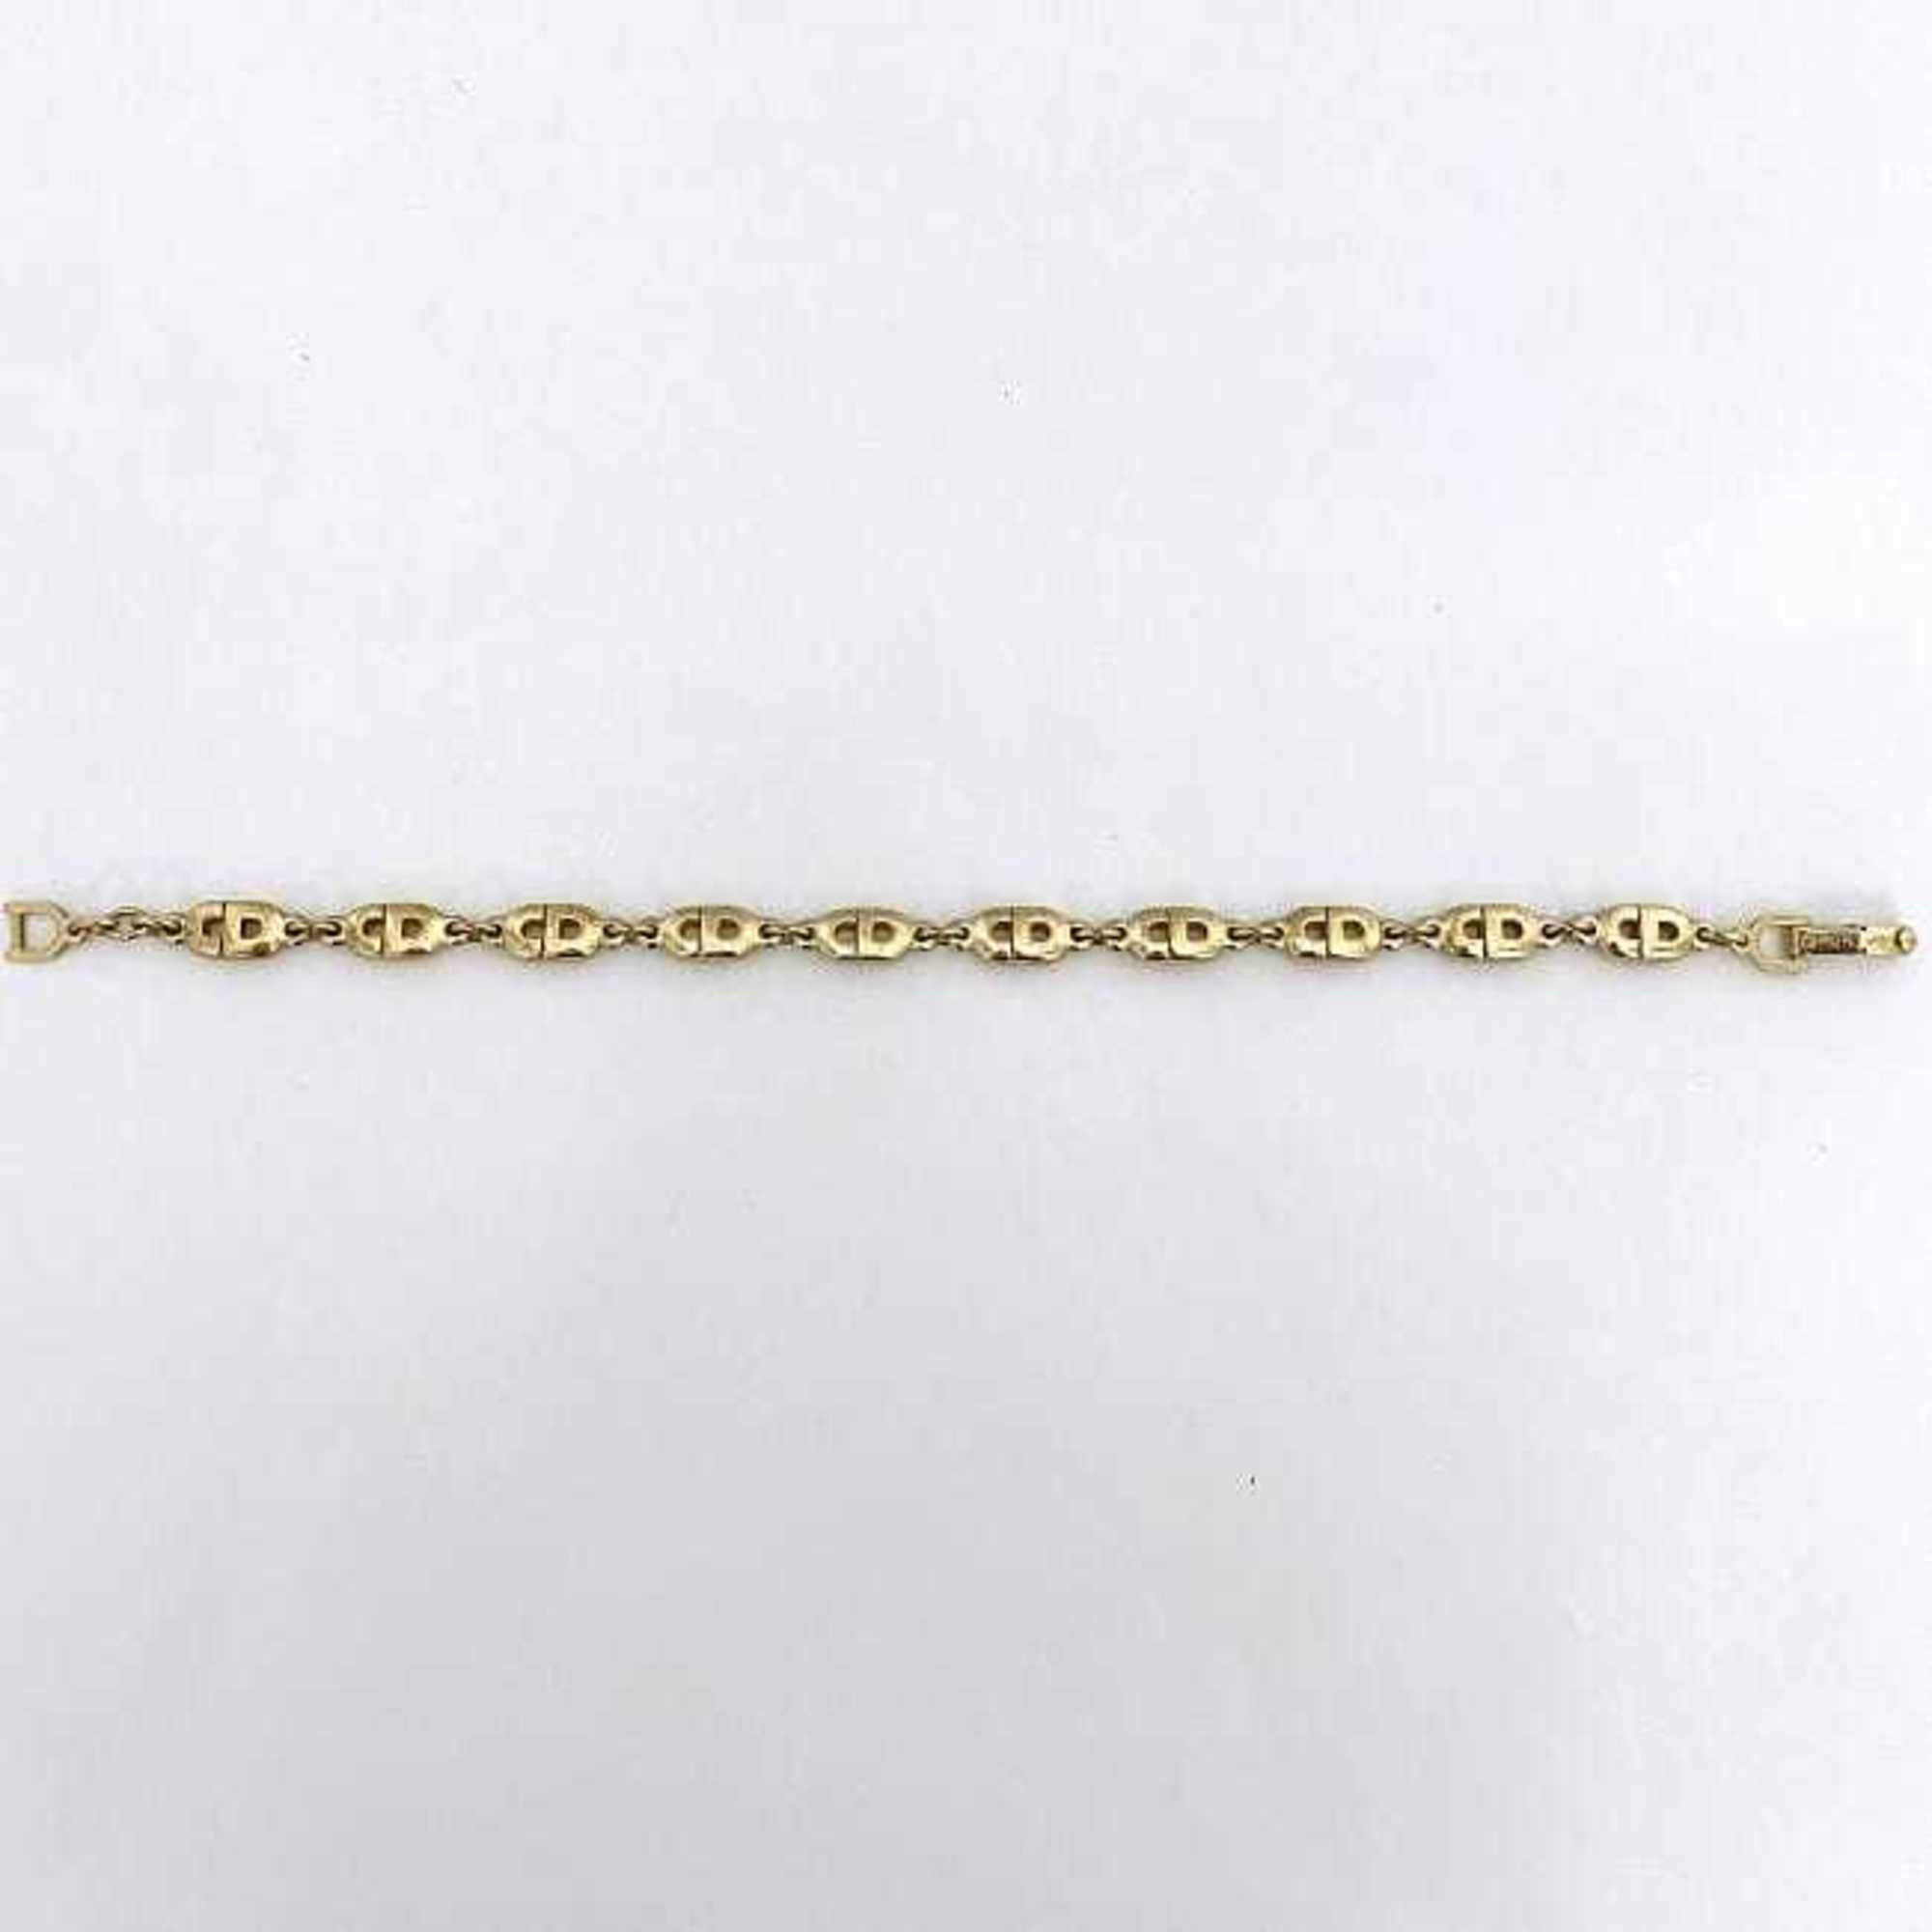 Christian Dior Bracelet Gold ec-20588 CD GP Chain Women's Retro